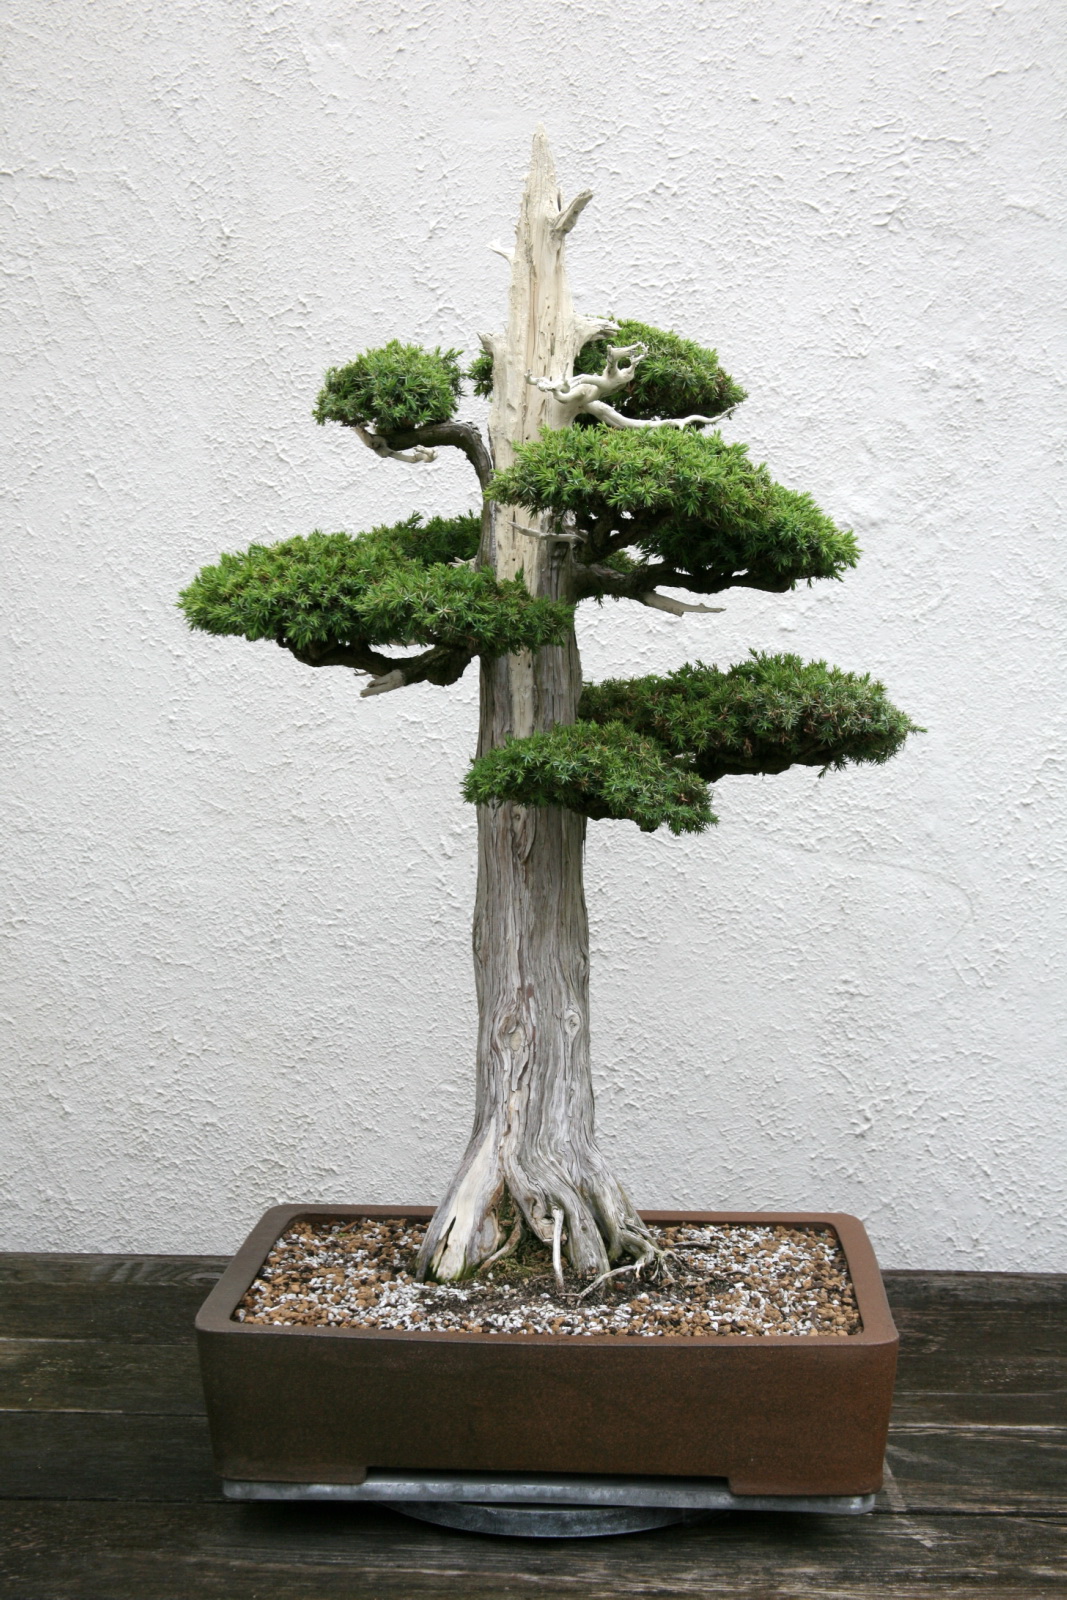 an image of a bonsai tree on display